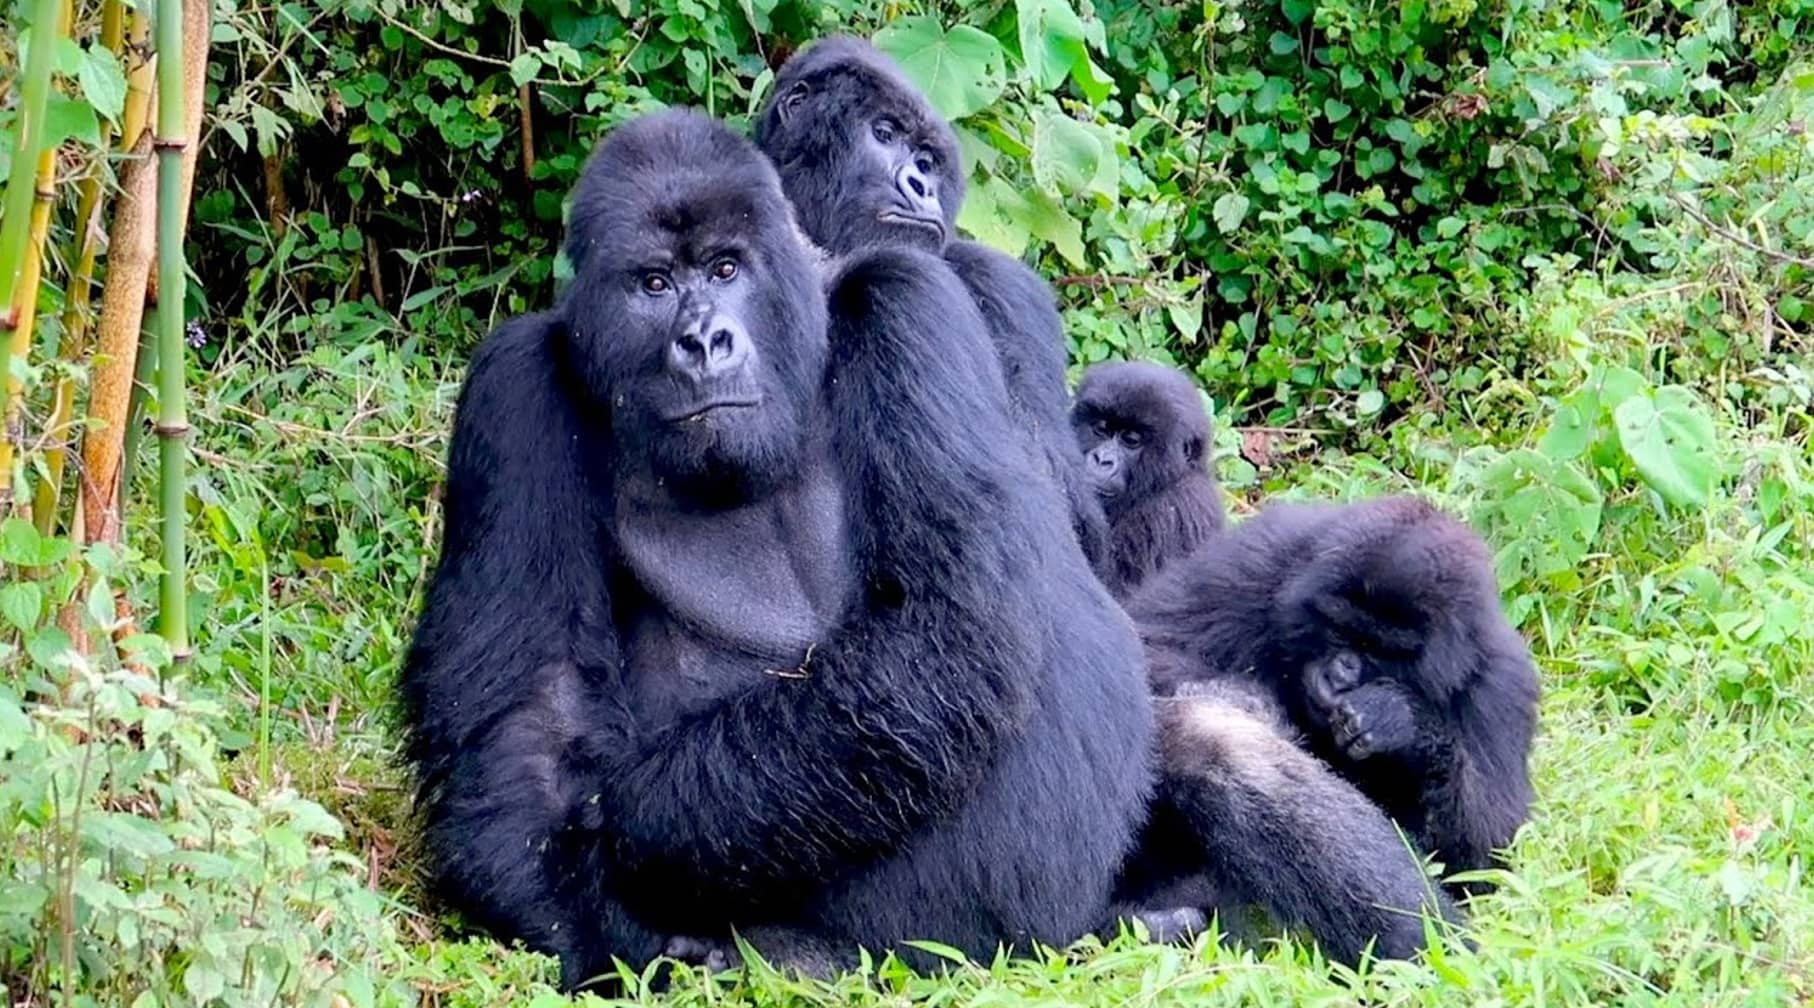 Gorillas in Bwindi National Park, Uganda